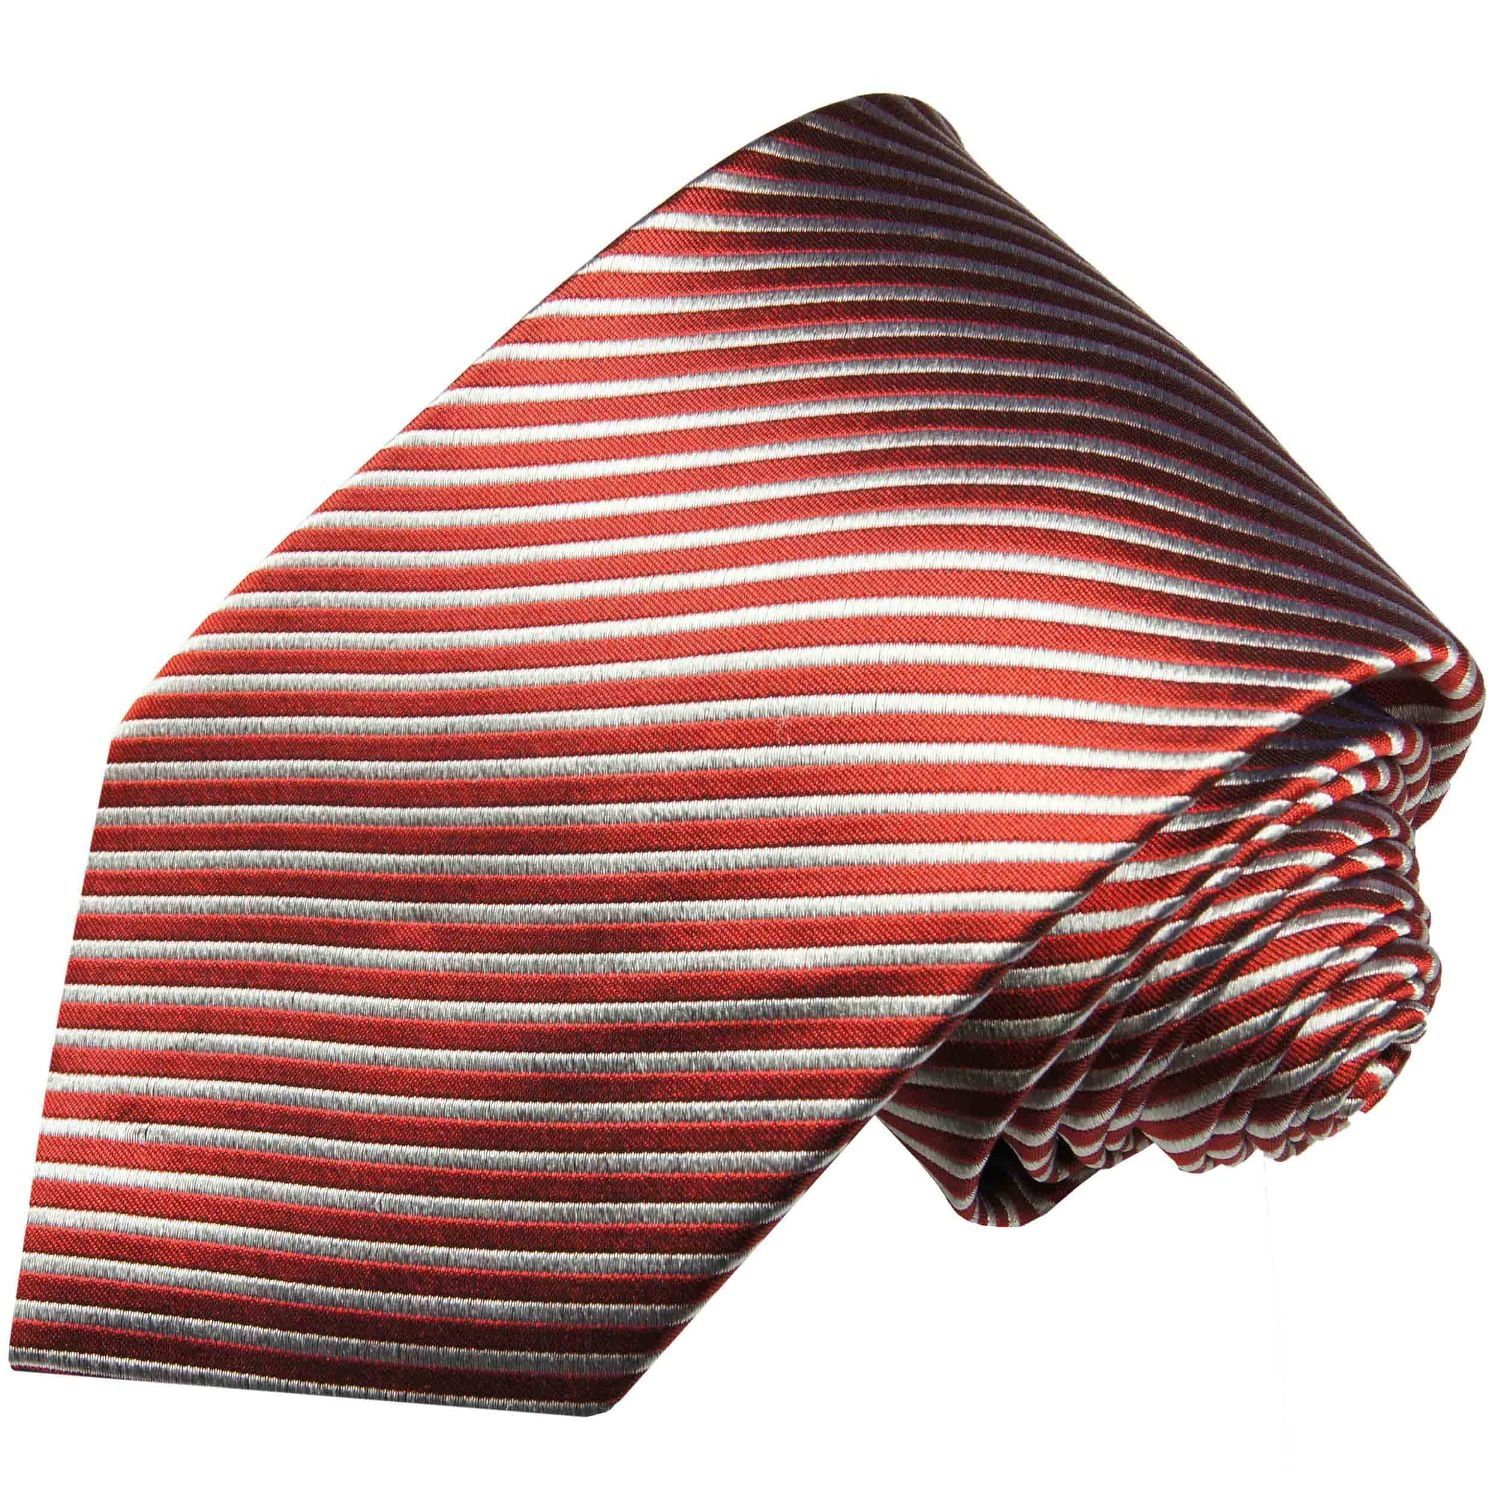 Paul Malone Krawatte Designer Seidenkrawatte Herren Schlips modern gestreift 100% Seide Schmal (6cm), rot 447